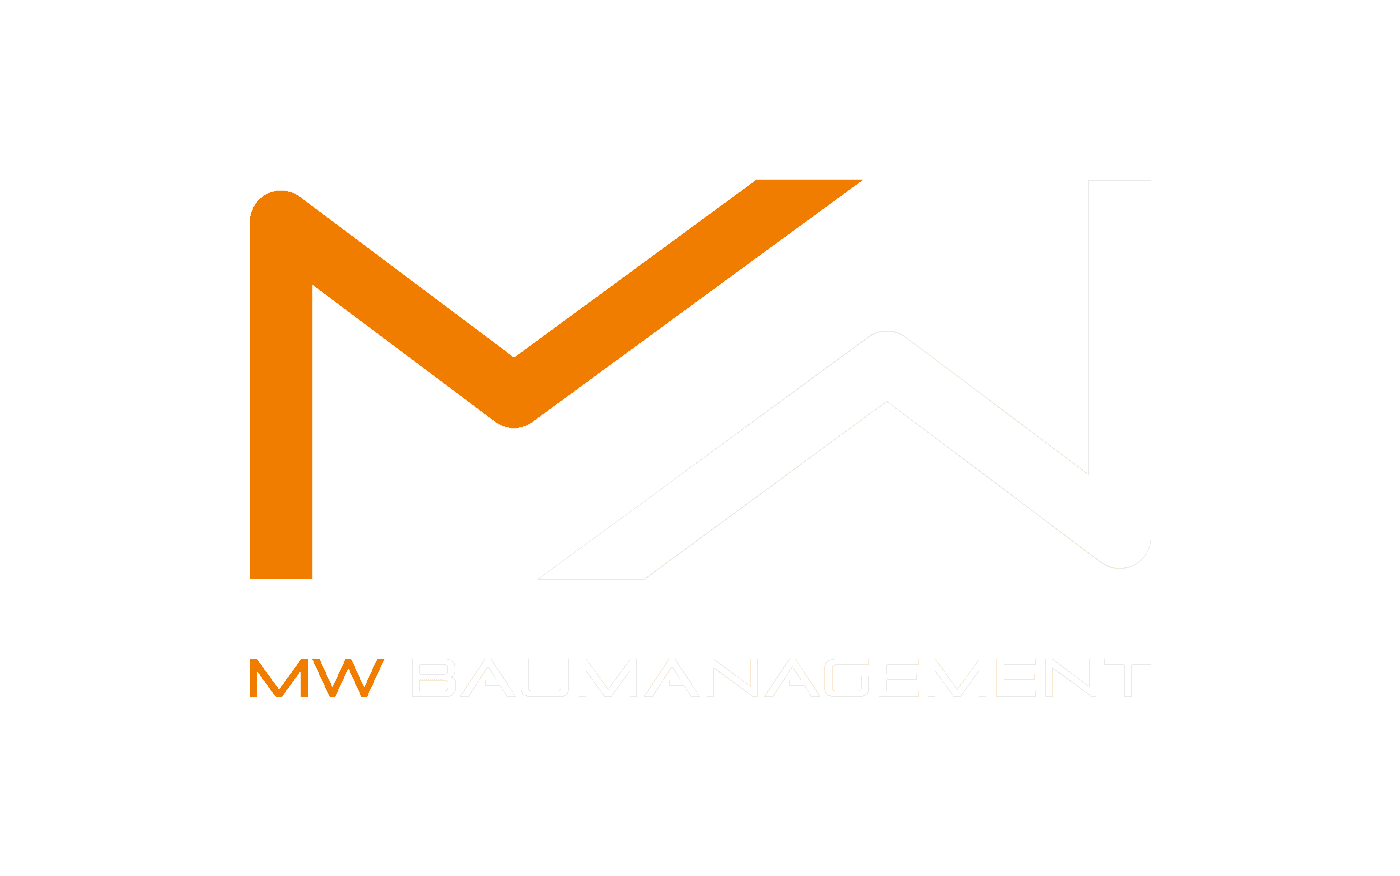 MW Baumanagement